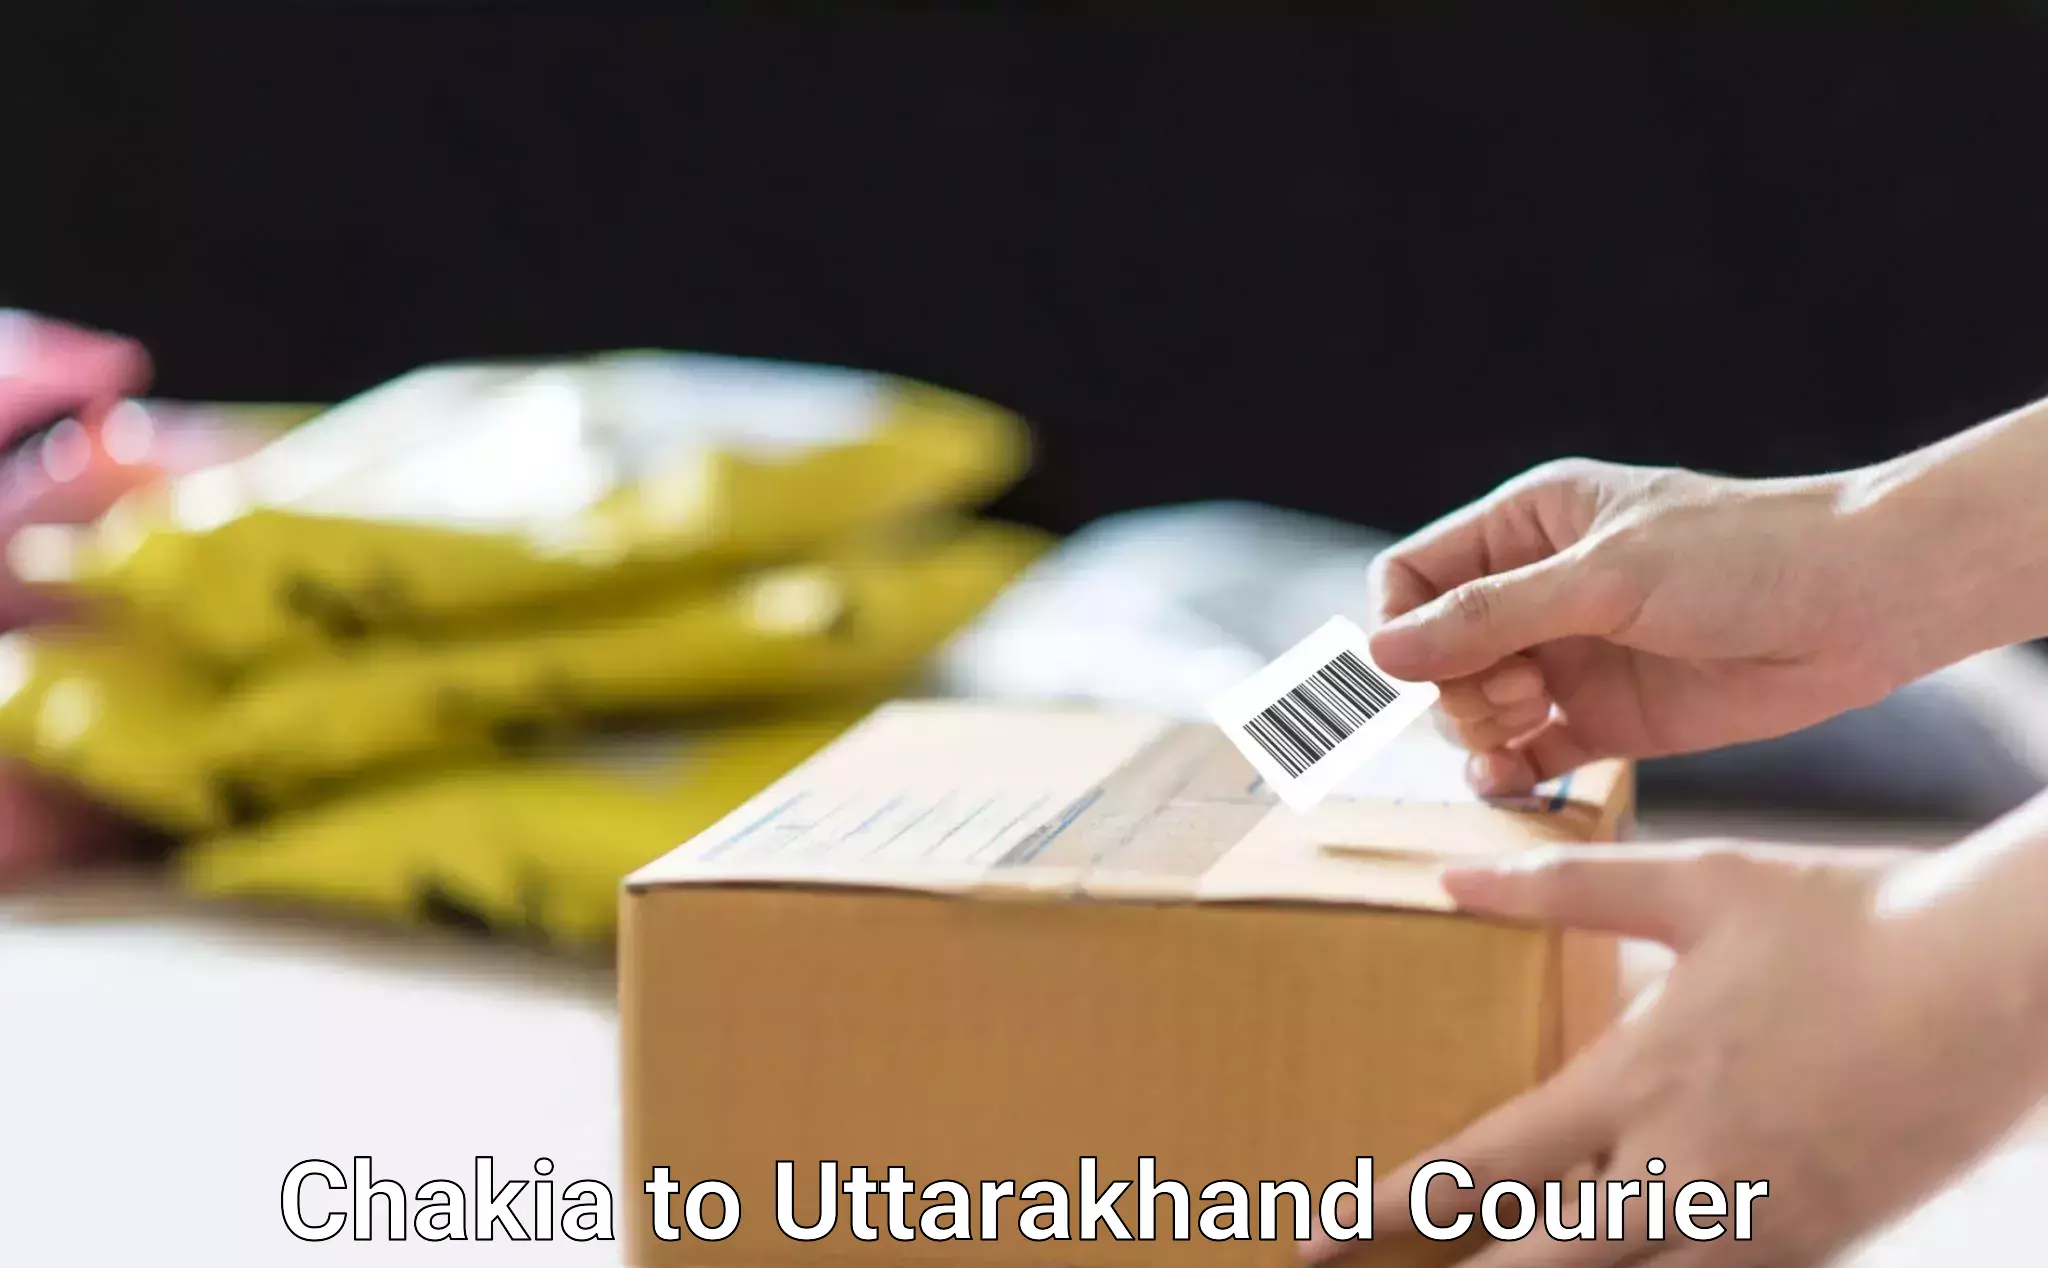 Furniture moving specialists Chakia to Uttarakhand